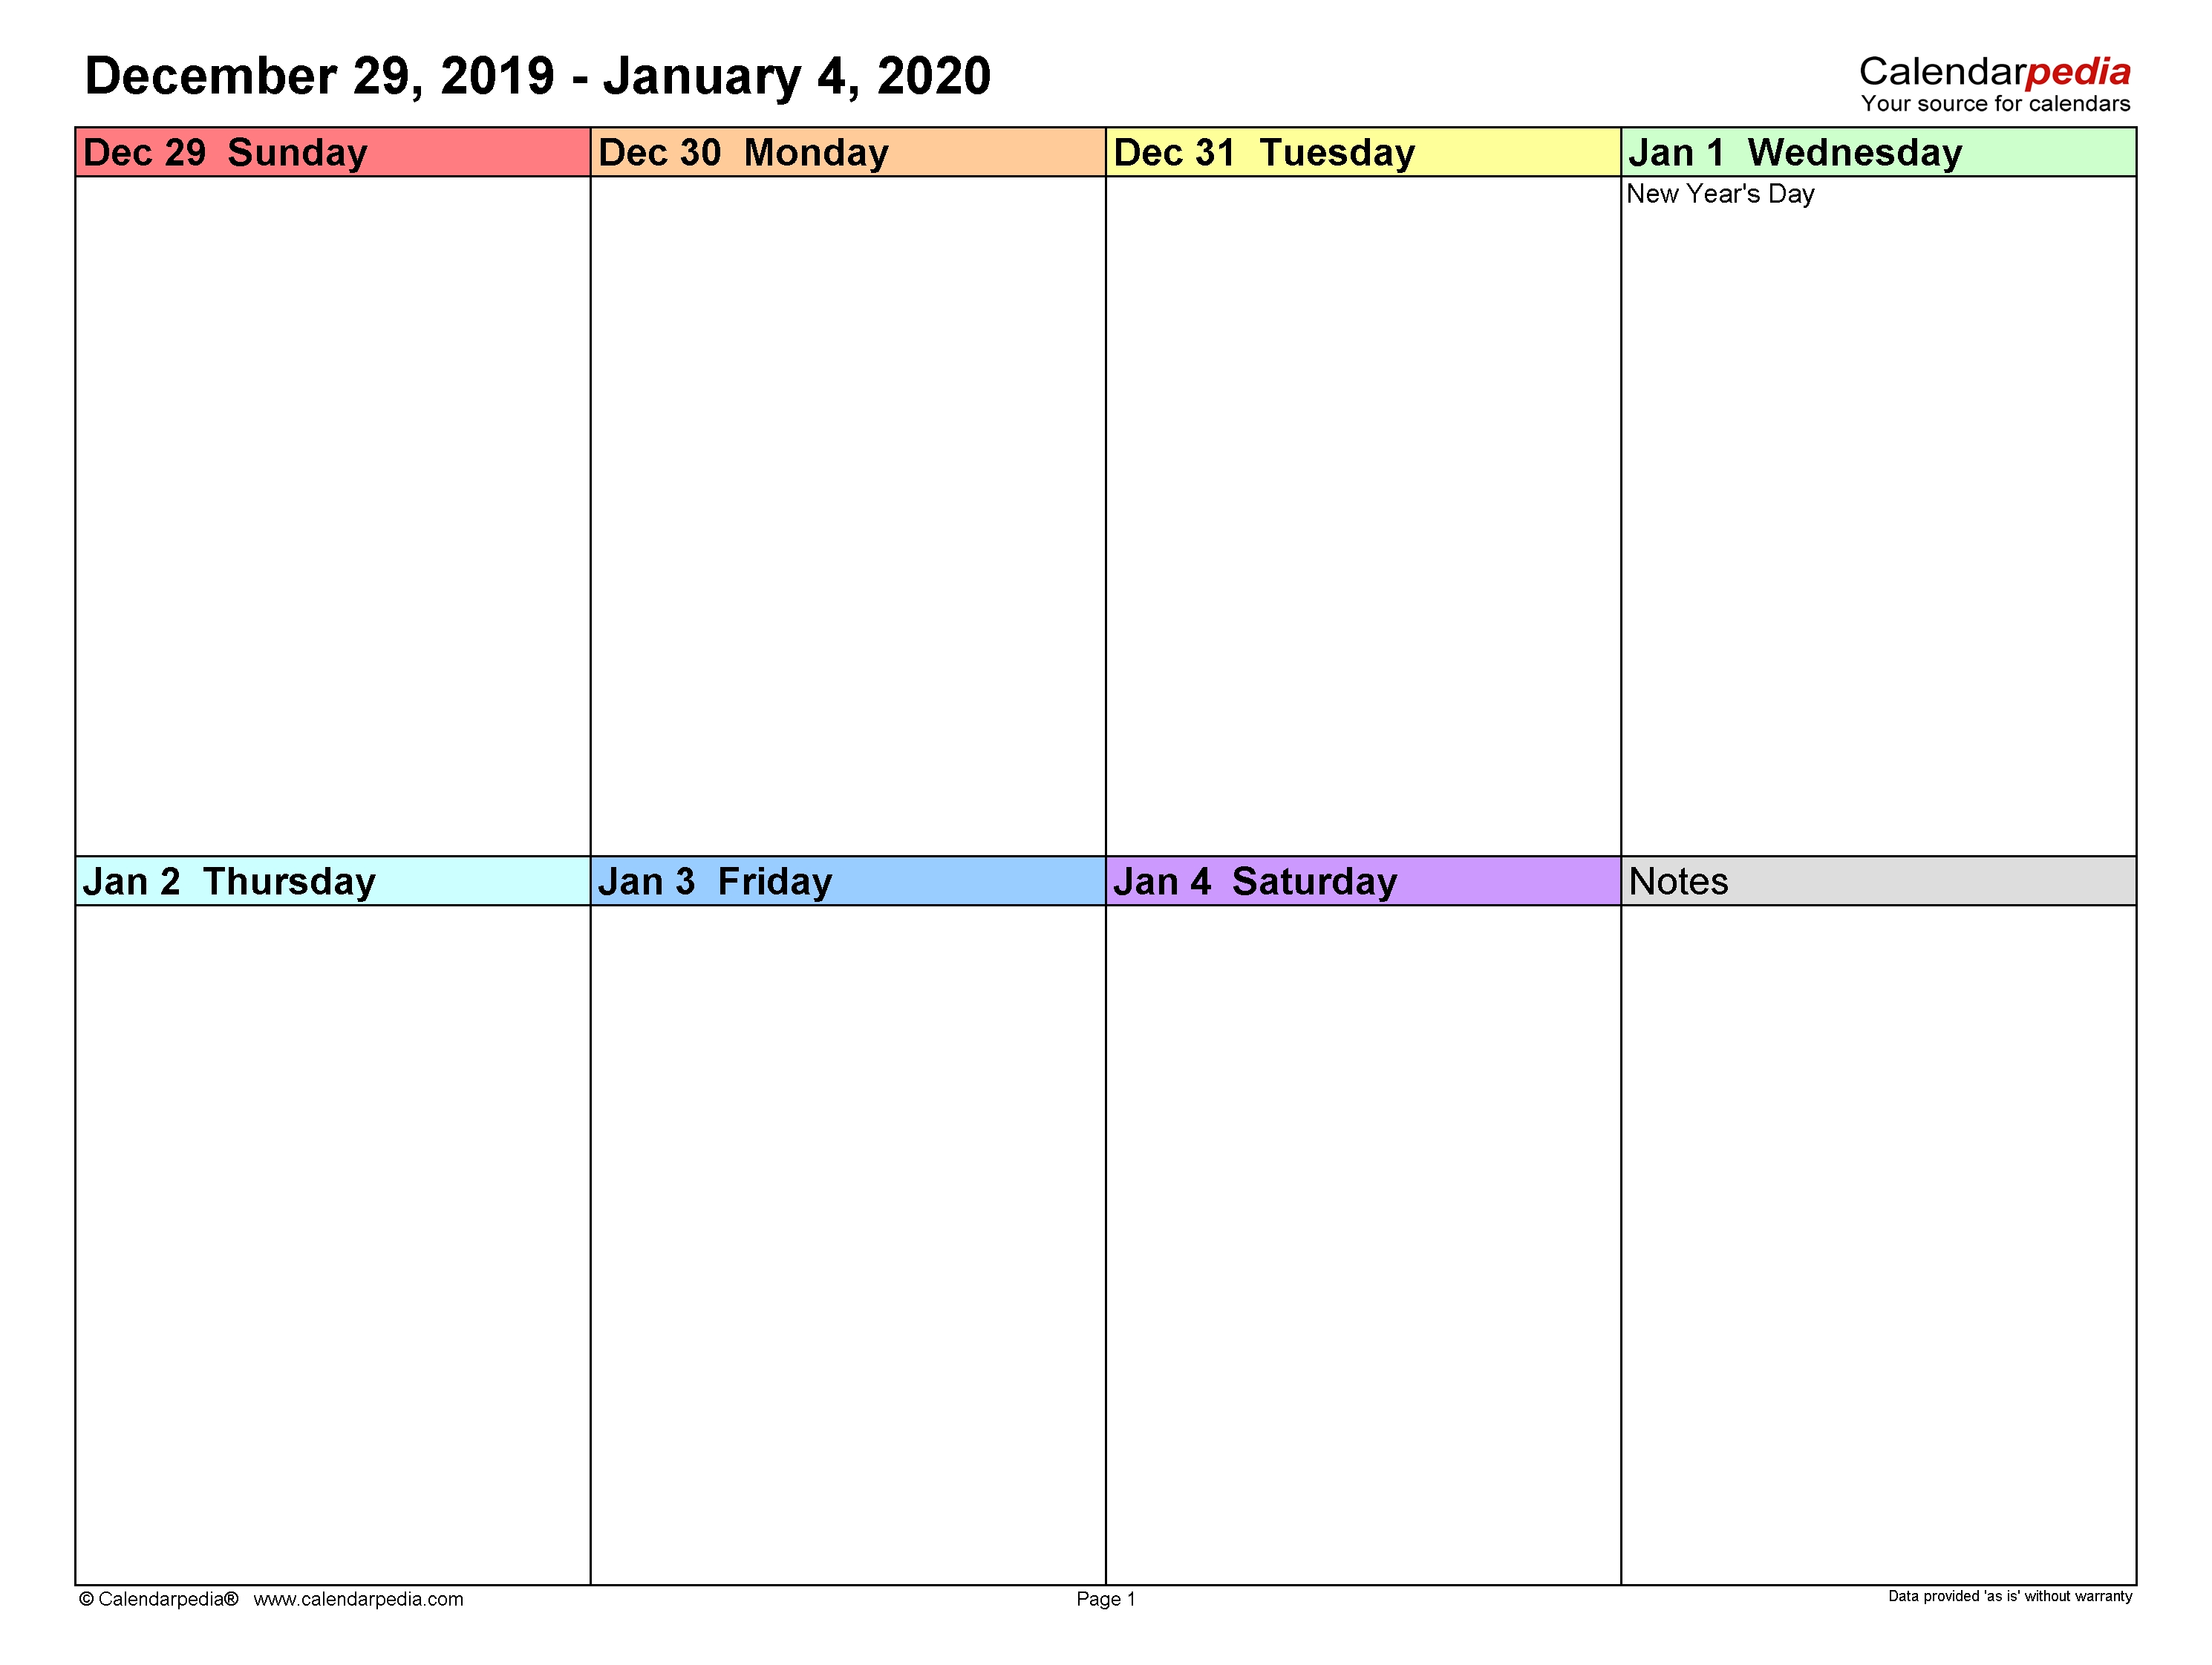 Weekly Calendars 2020 For Word - 12 Free Printable Templates 1/2 Sheet Calendar Template